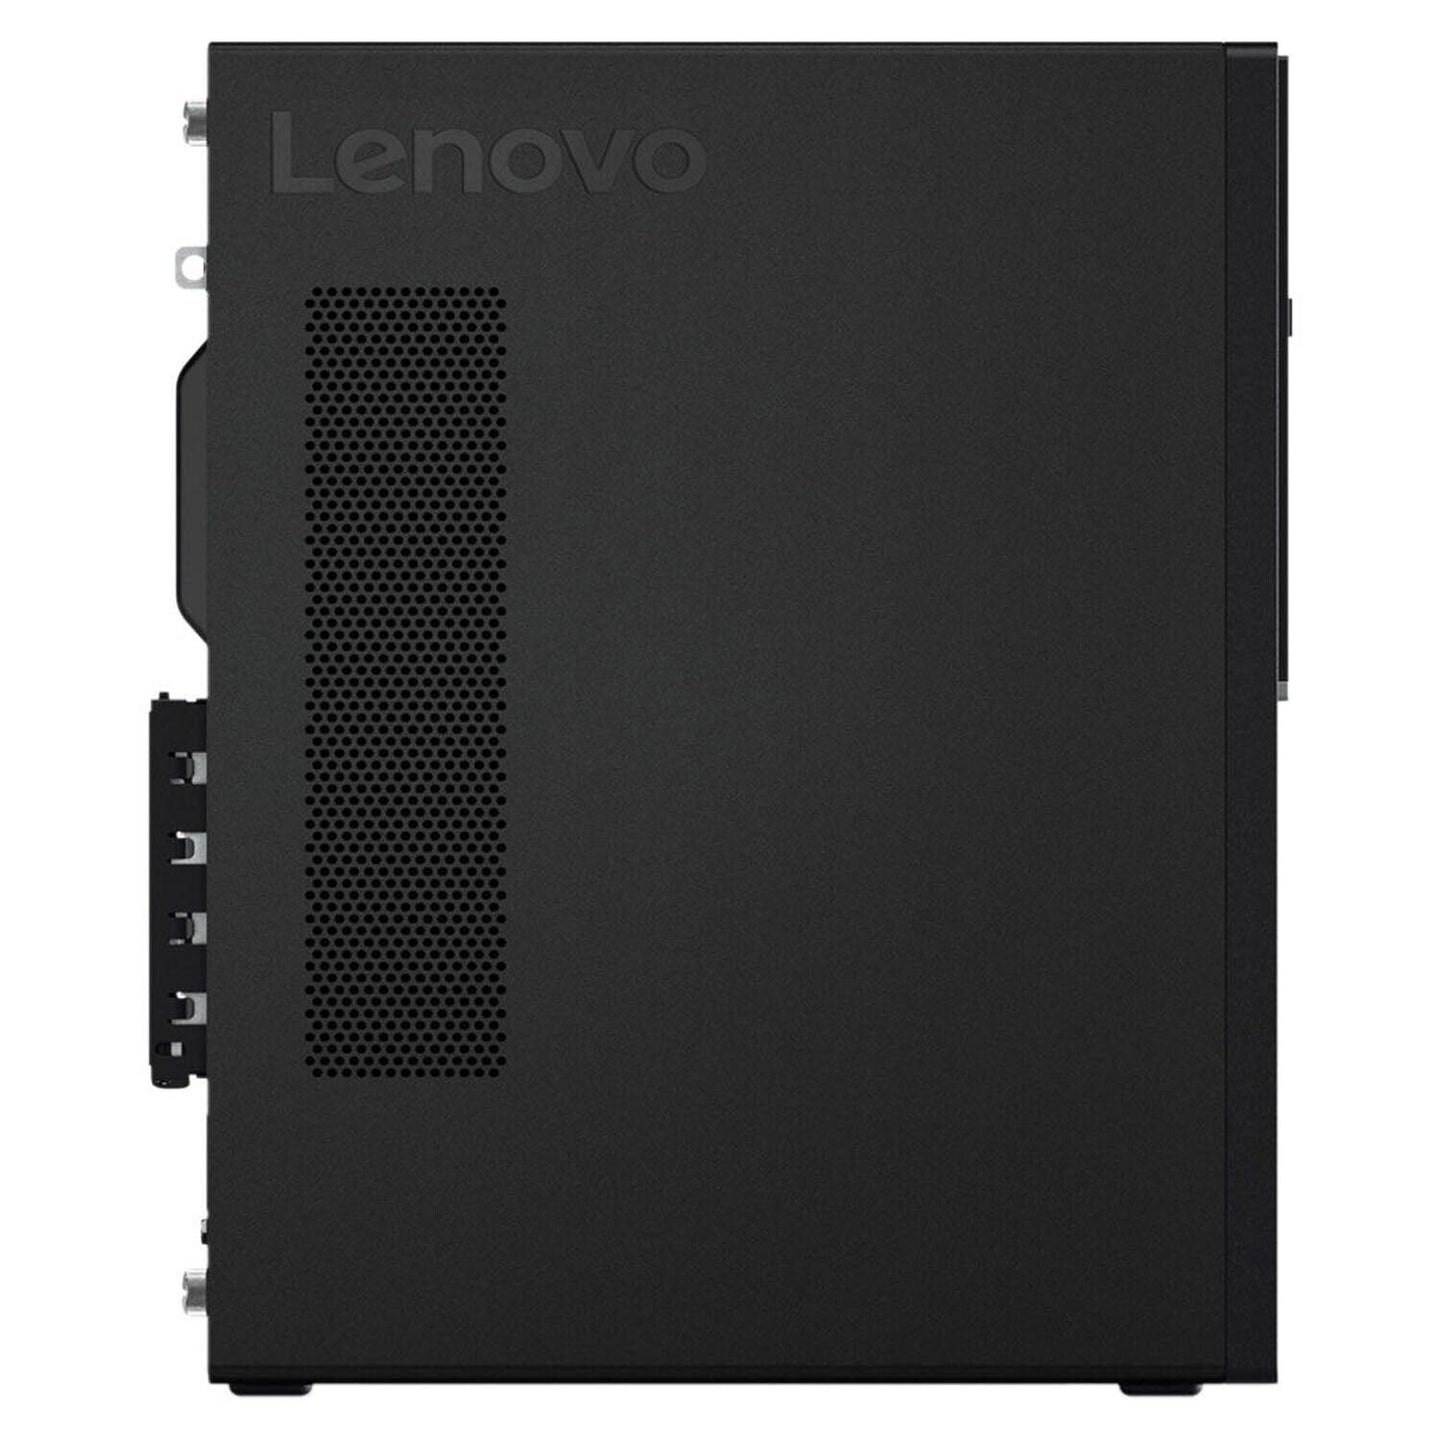 Lenovo V520S-08IKL Desktop PC Intel Core i3-7100 8GB DDR4 500GB HDD WIN 10 PRO